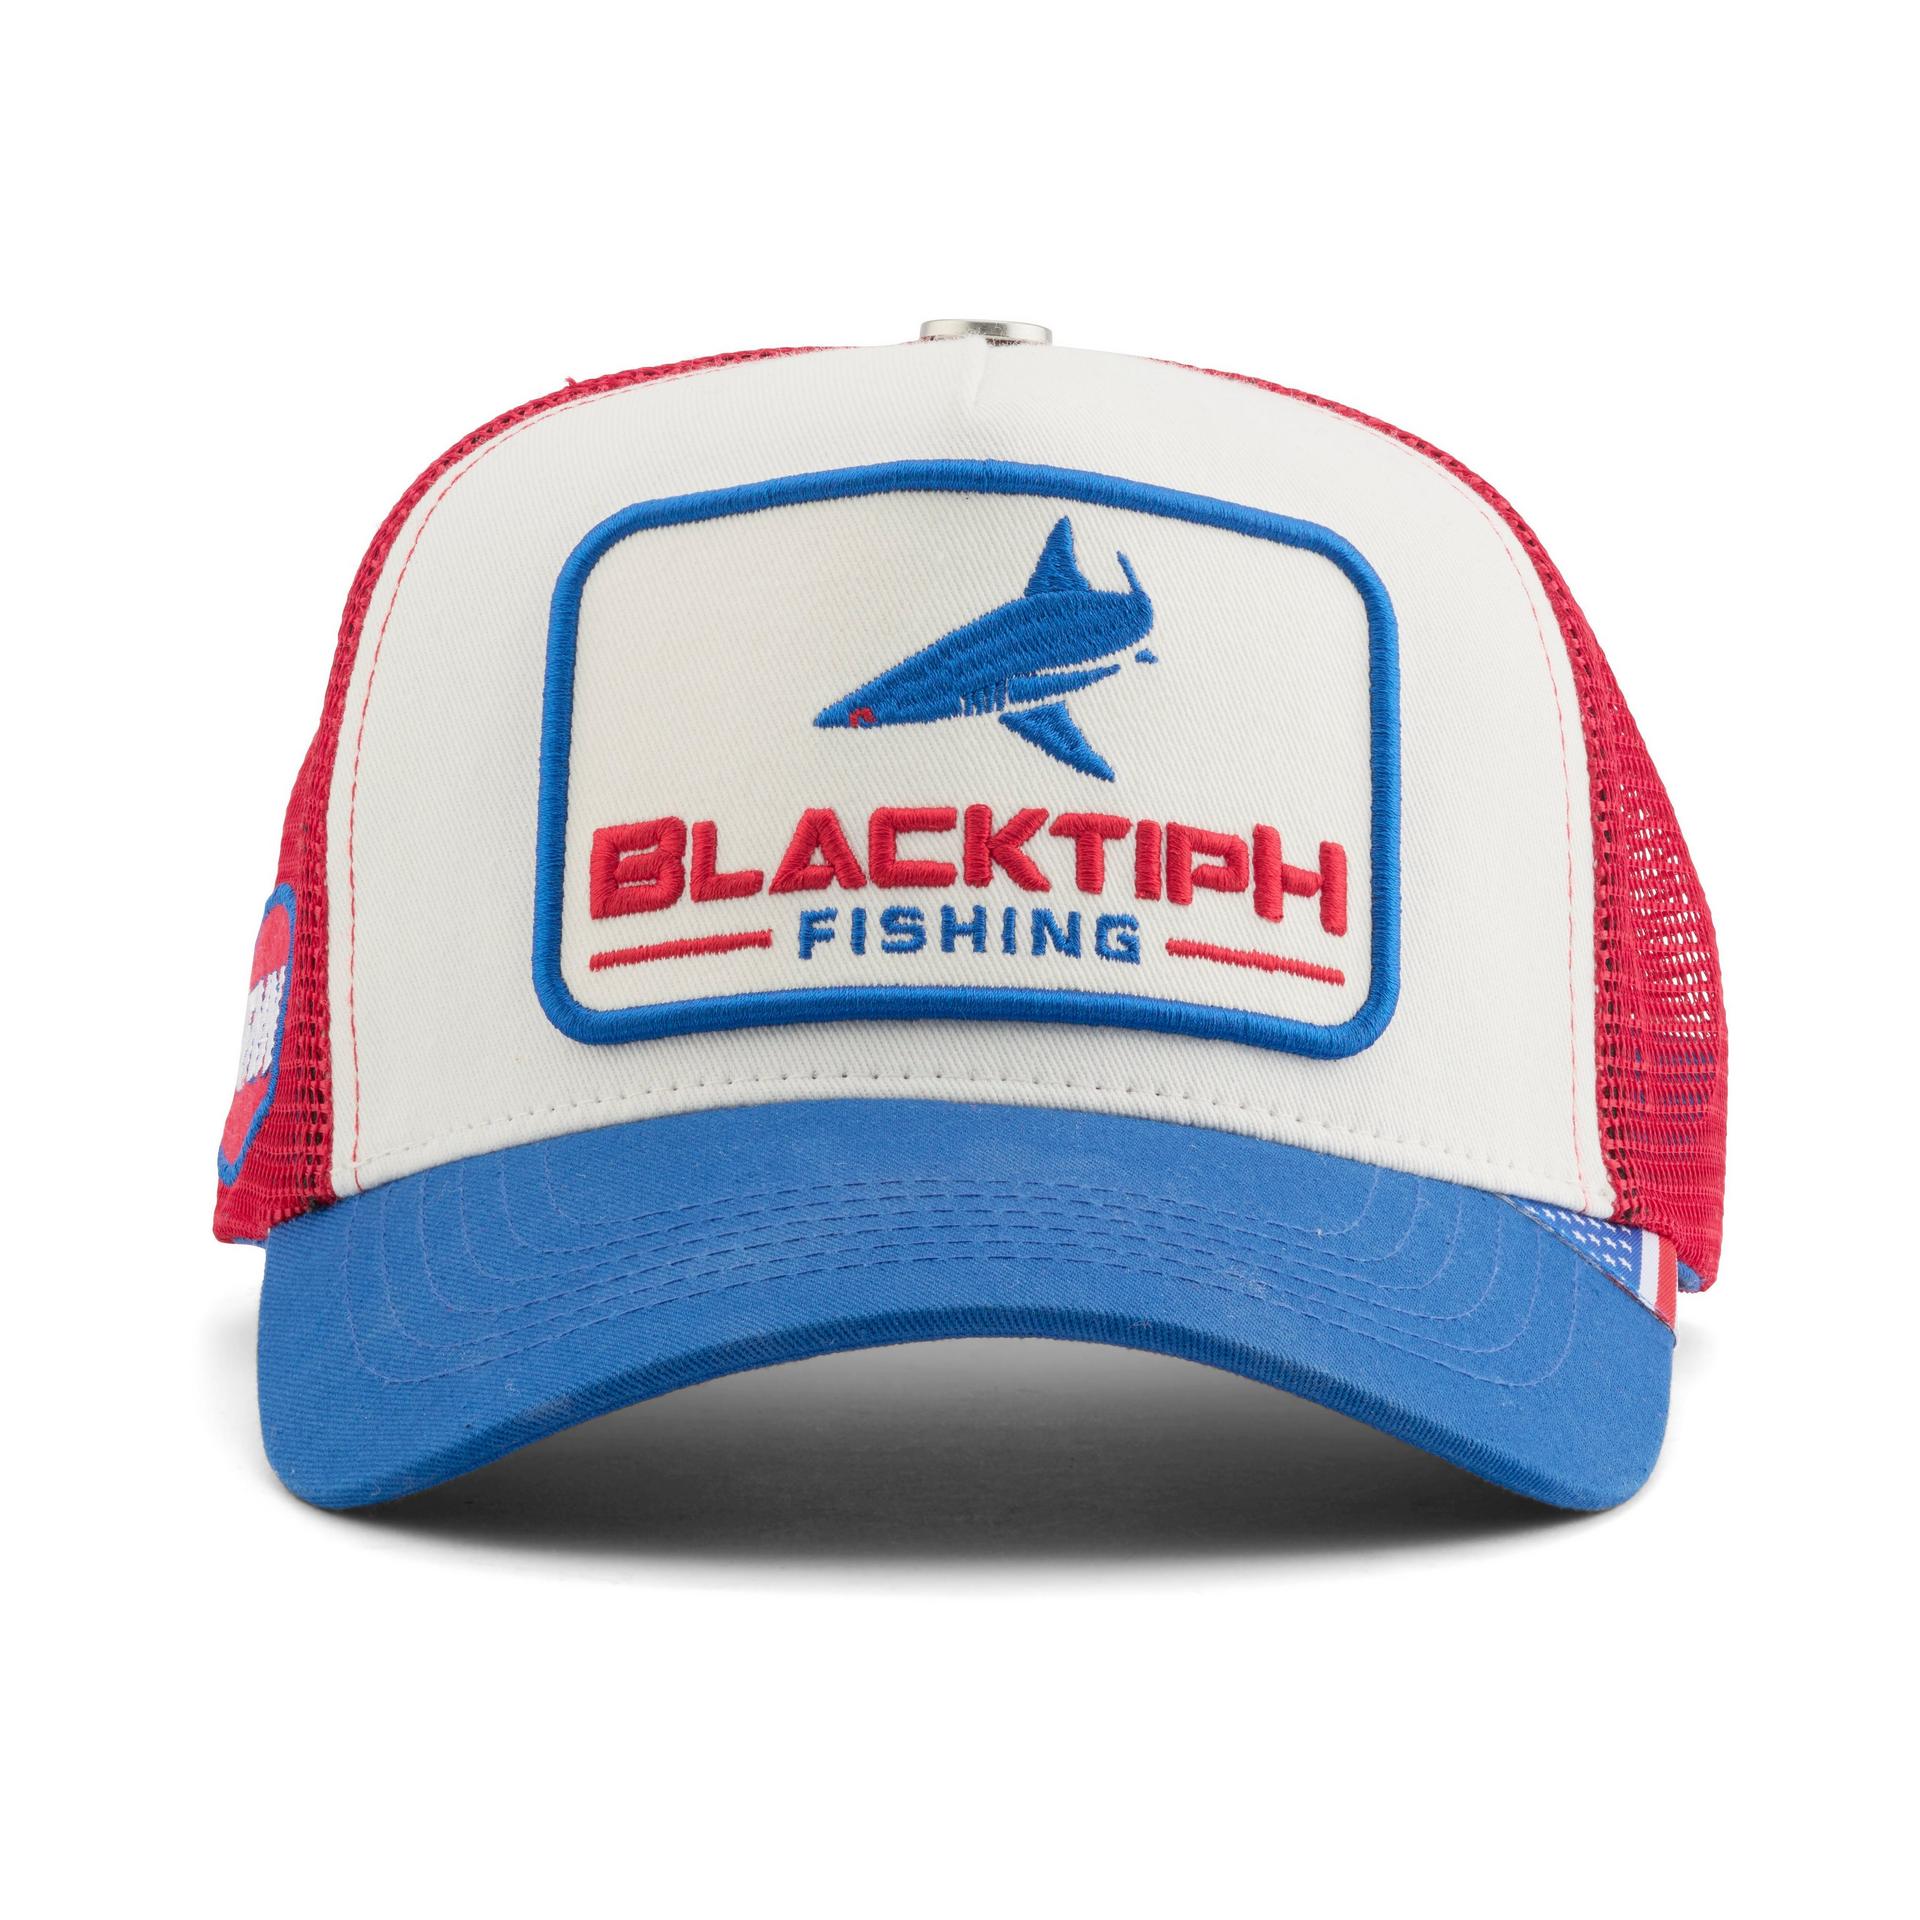 Penn Hat - Baseball Fishing Cap